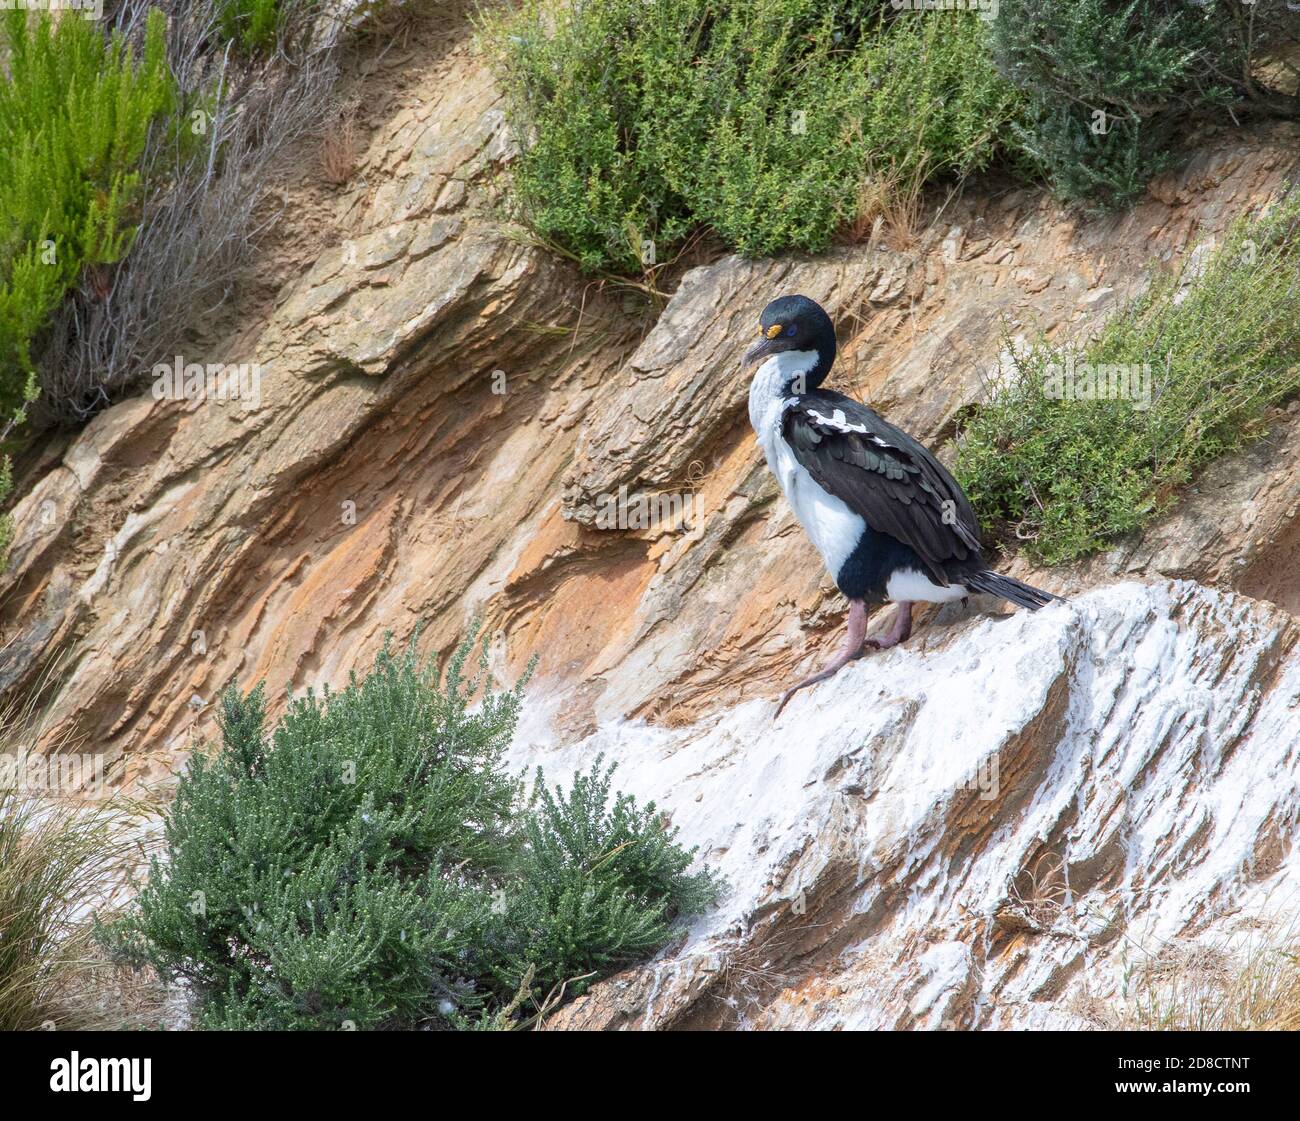 rough-faced cormorant, New Zealand king shag, king shag, kawau (Leucocarbo carunculatus, Phalacrocorax carunculatus), perching at the cliff of the Stock Photo